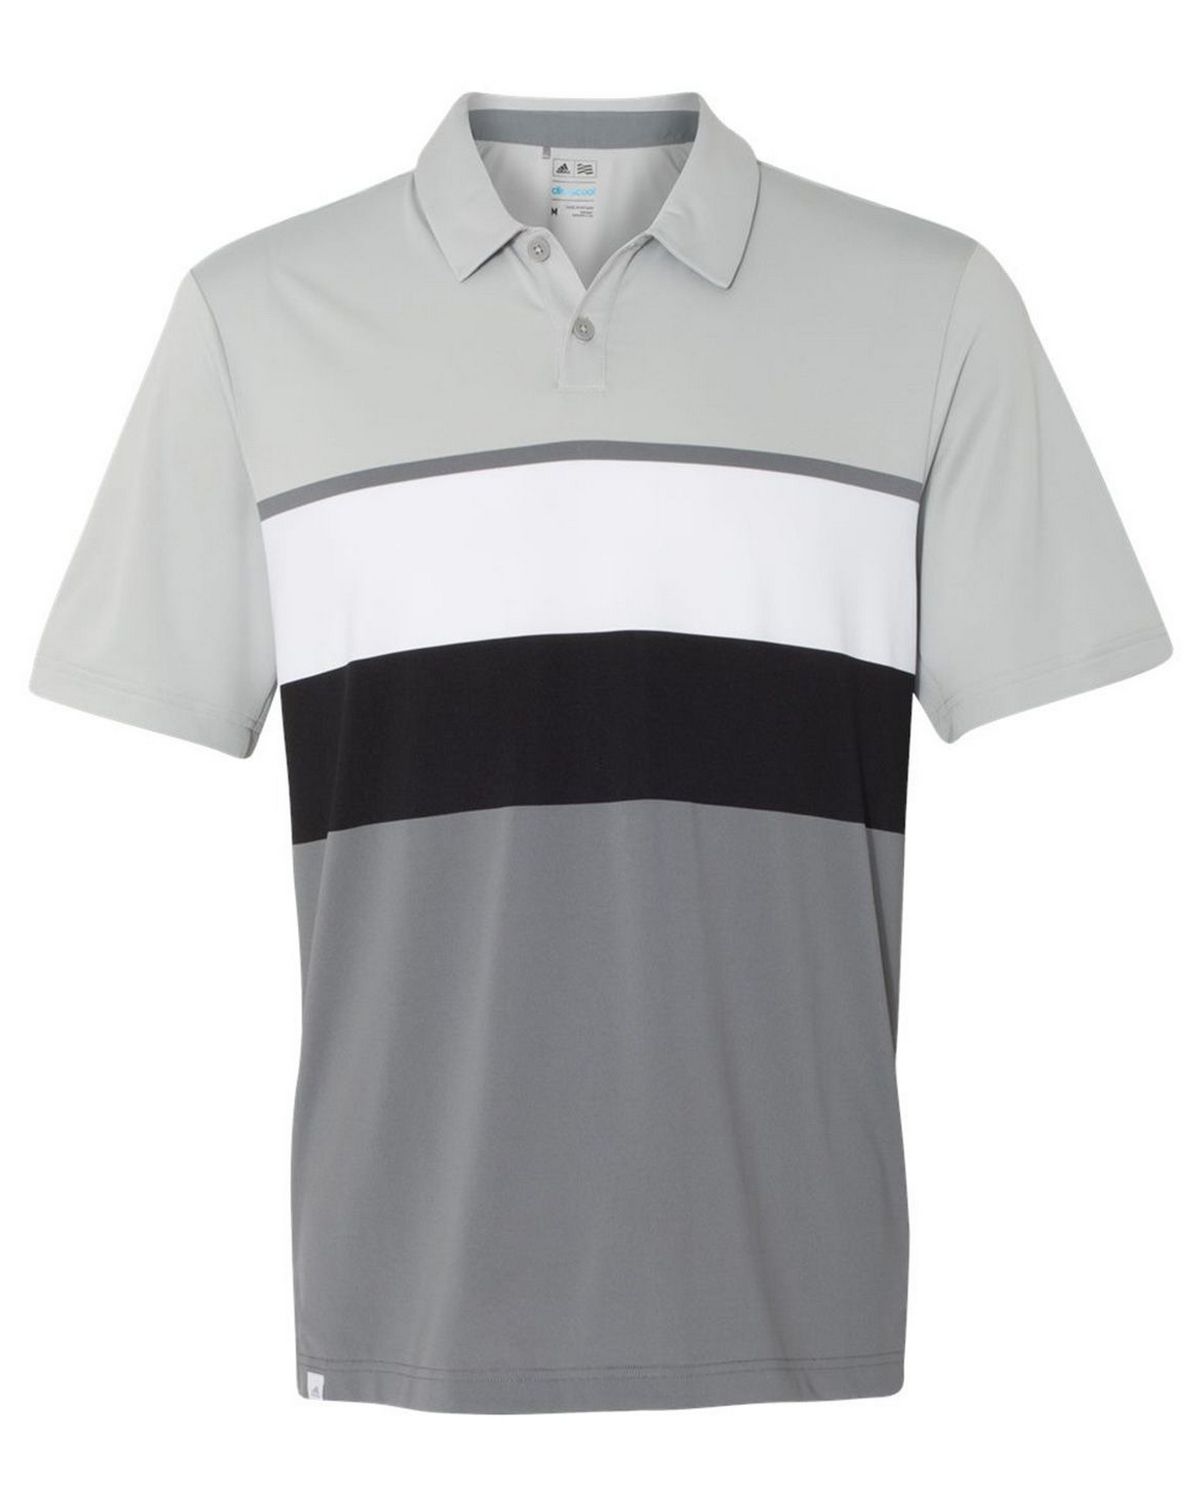 adidas golf men's climacool engineered stripe polo shirt